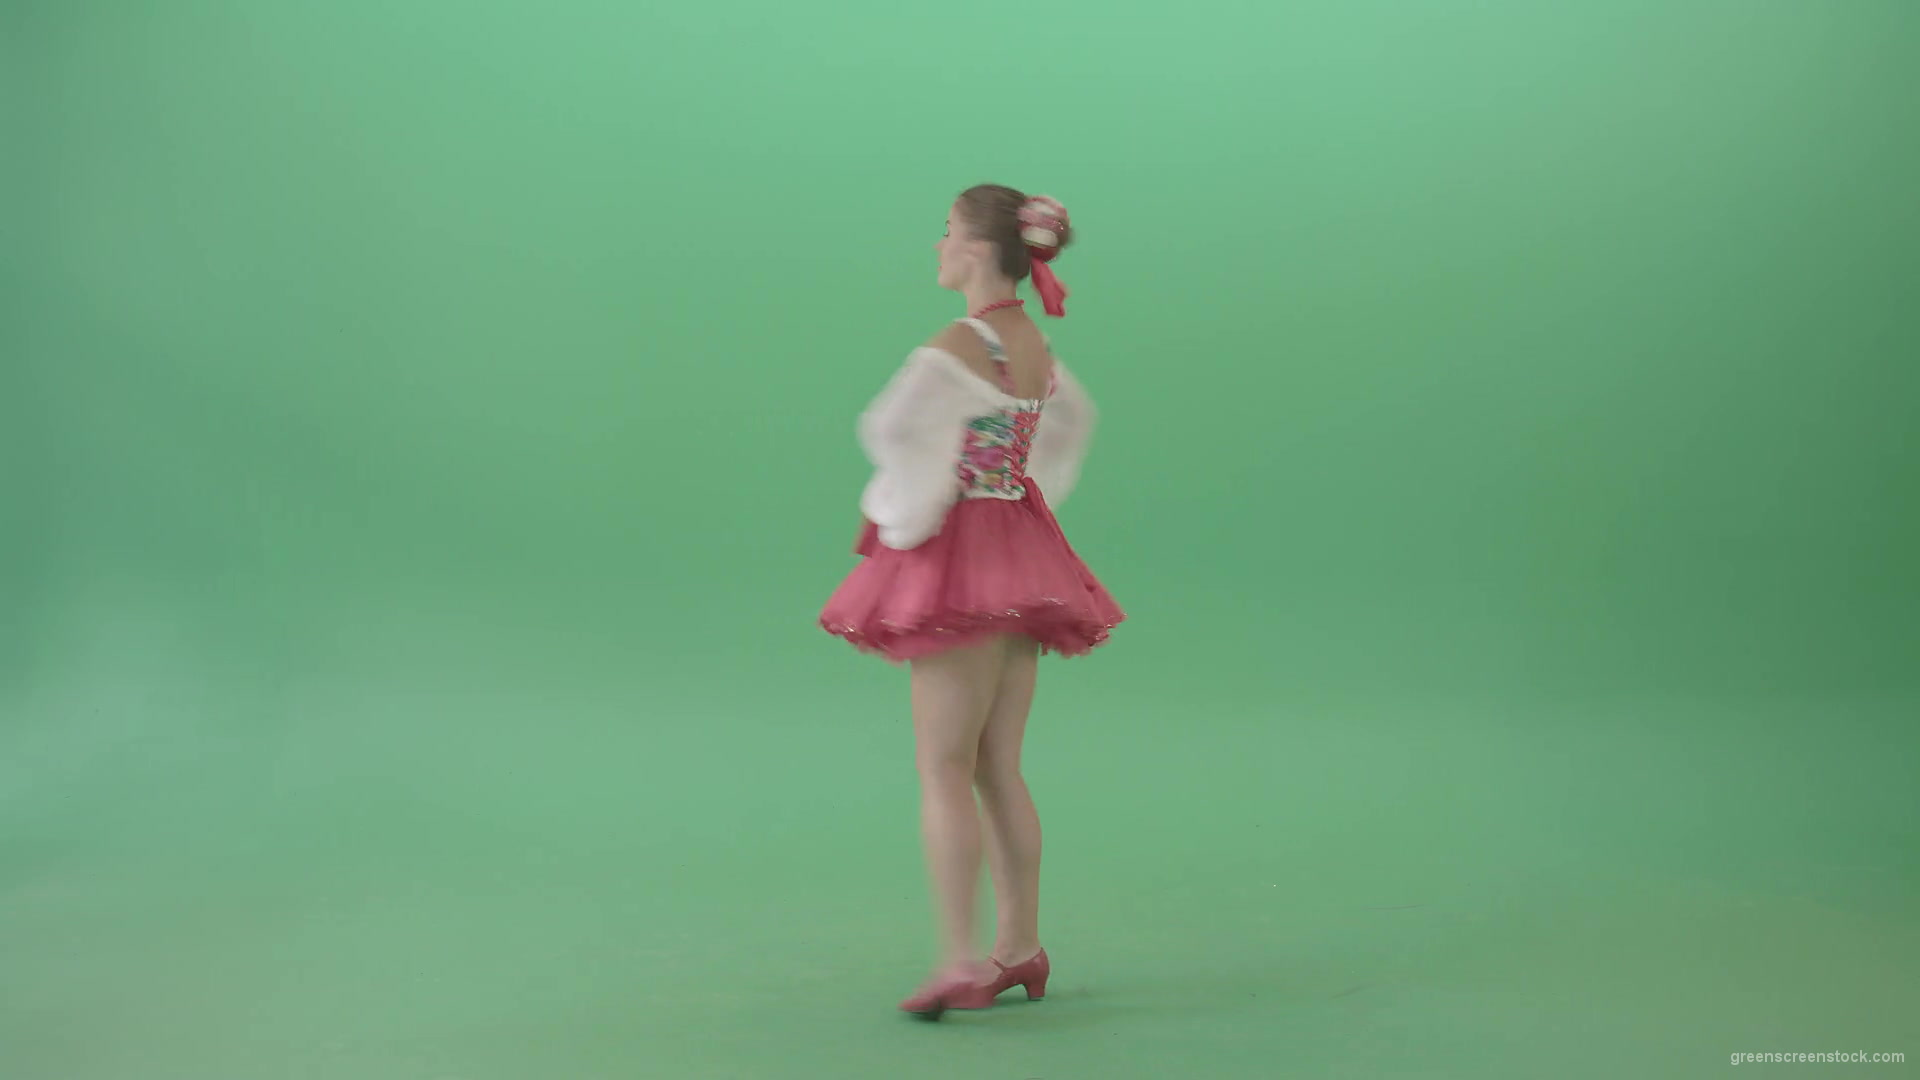 Ukrainian-Girl-spinning-in-dance-in-national-Ukraine-costume-isolated-on-Green-Screen-1920_004 Green Screen Stock